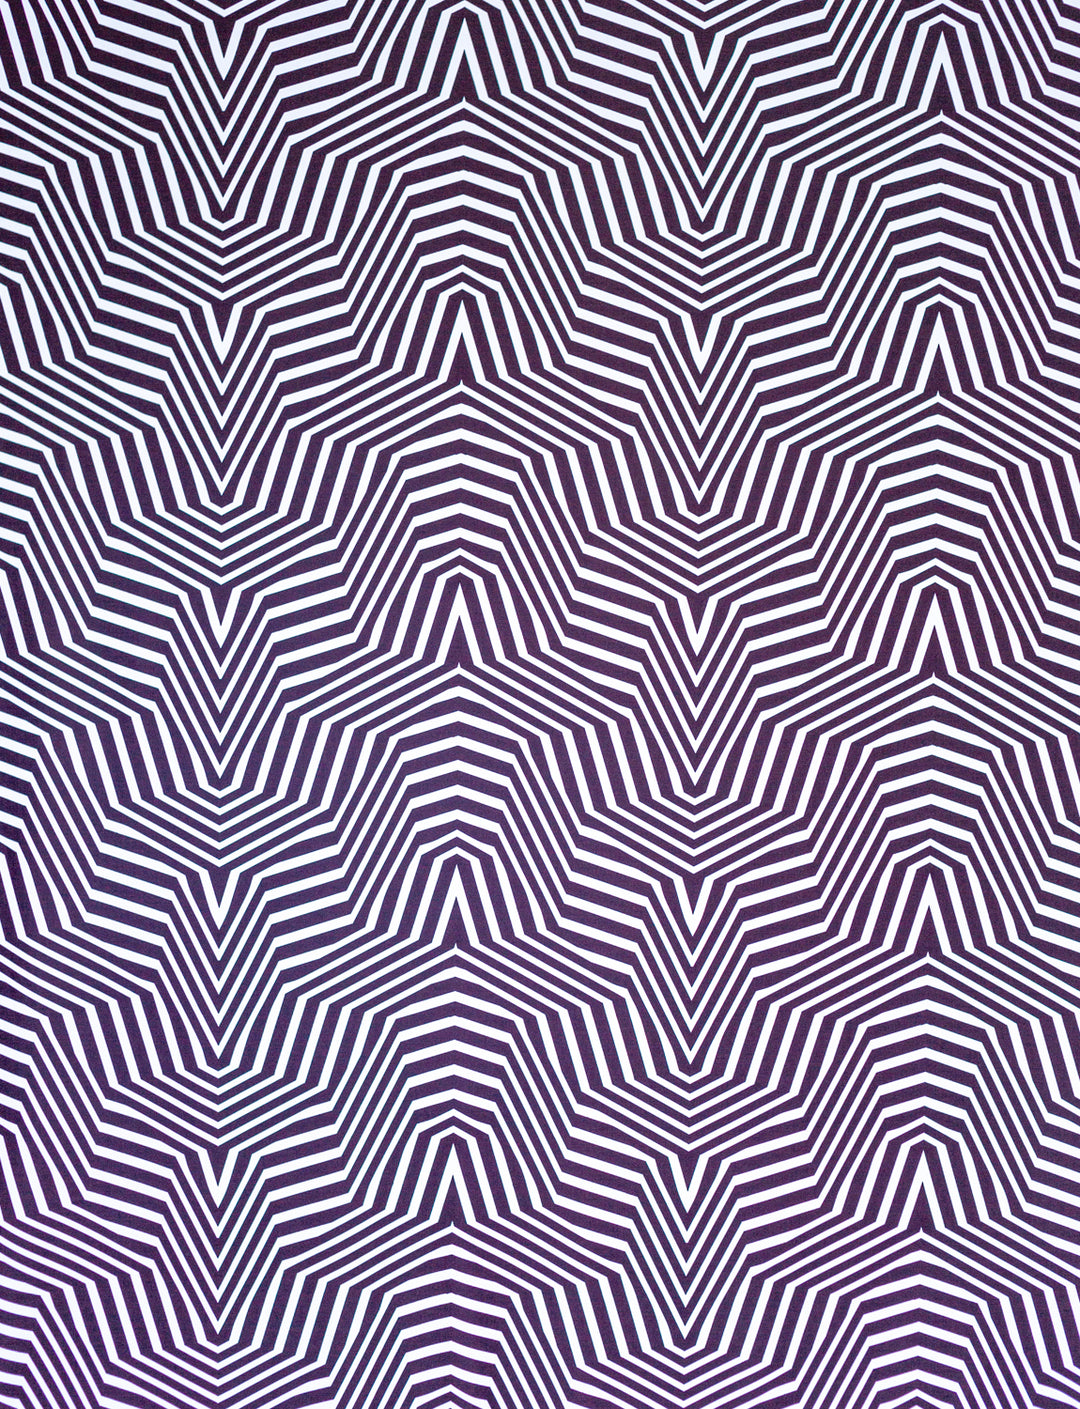 Black and white optical illusion print design.